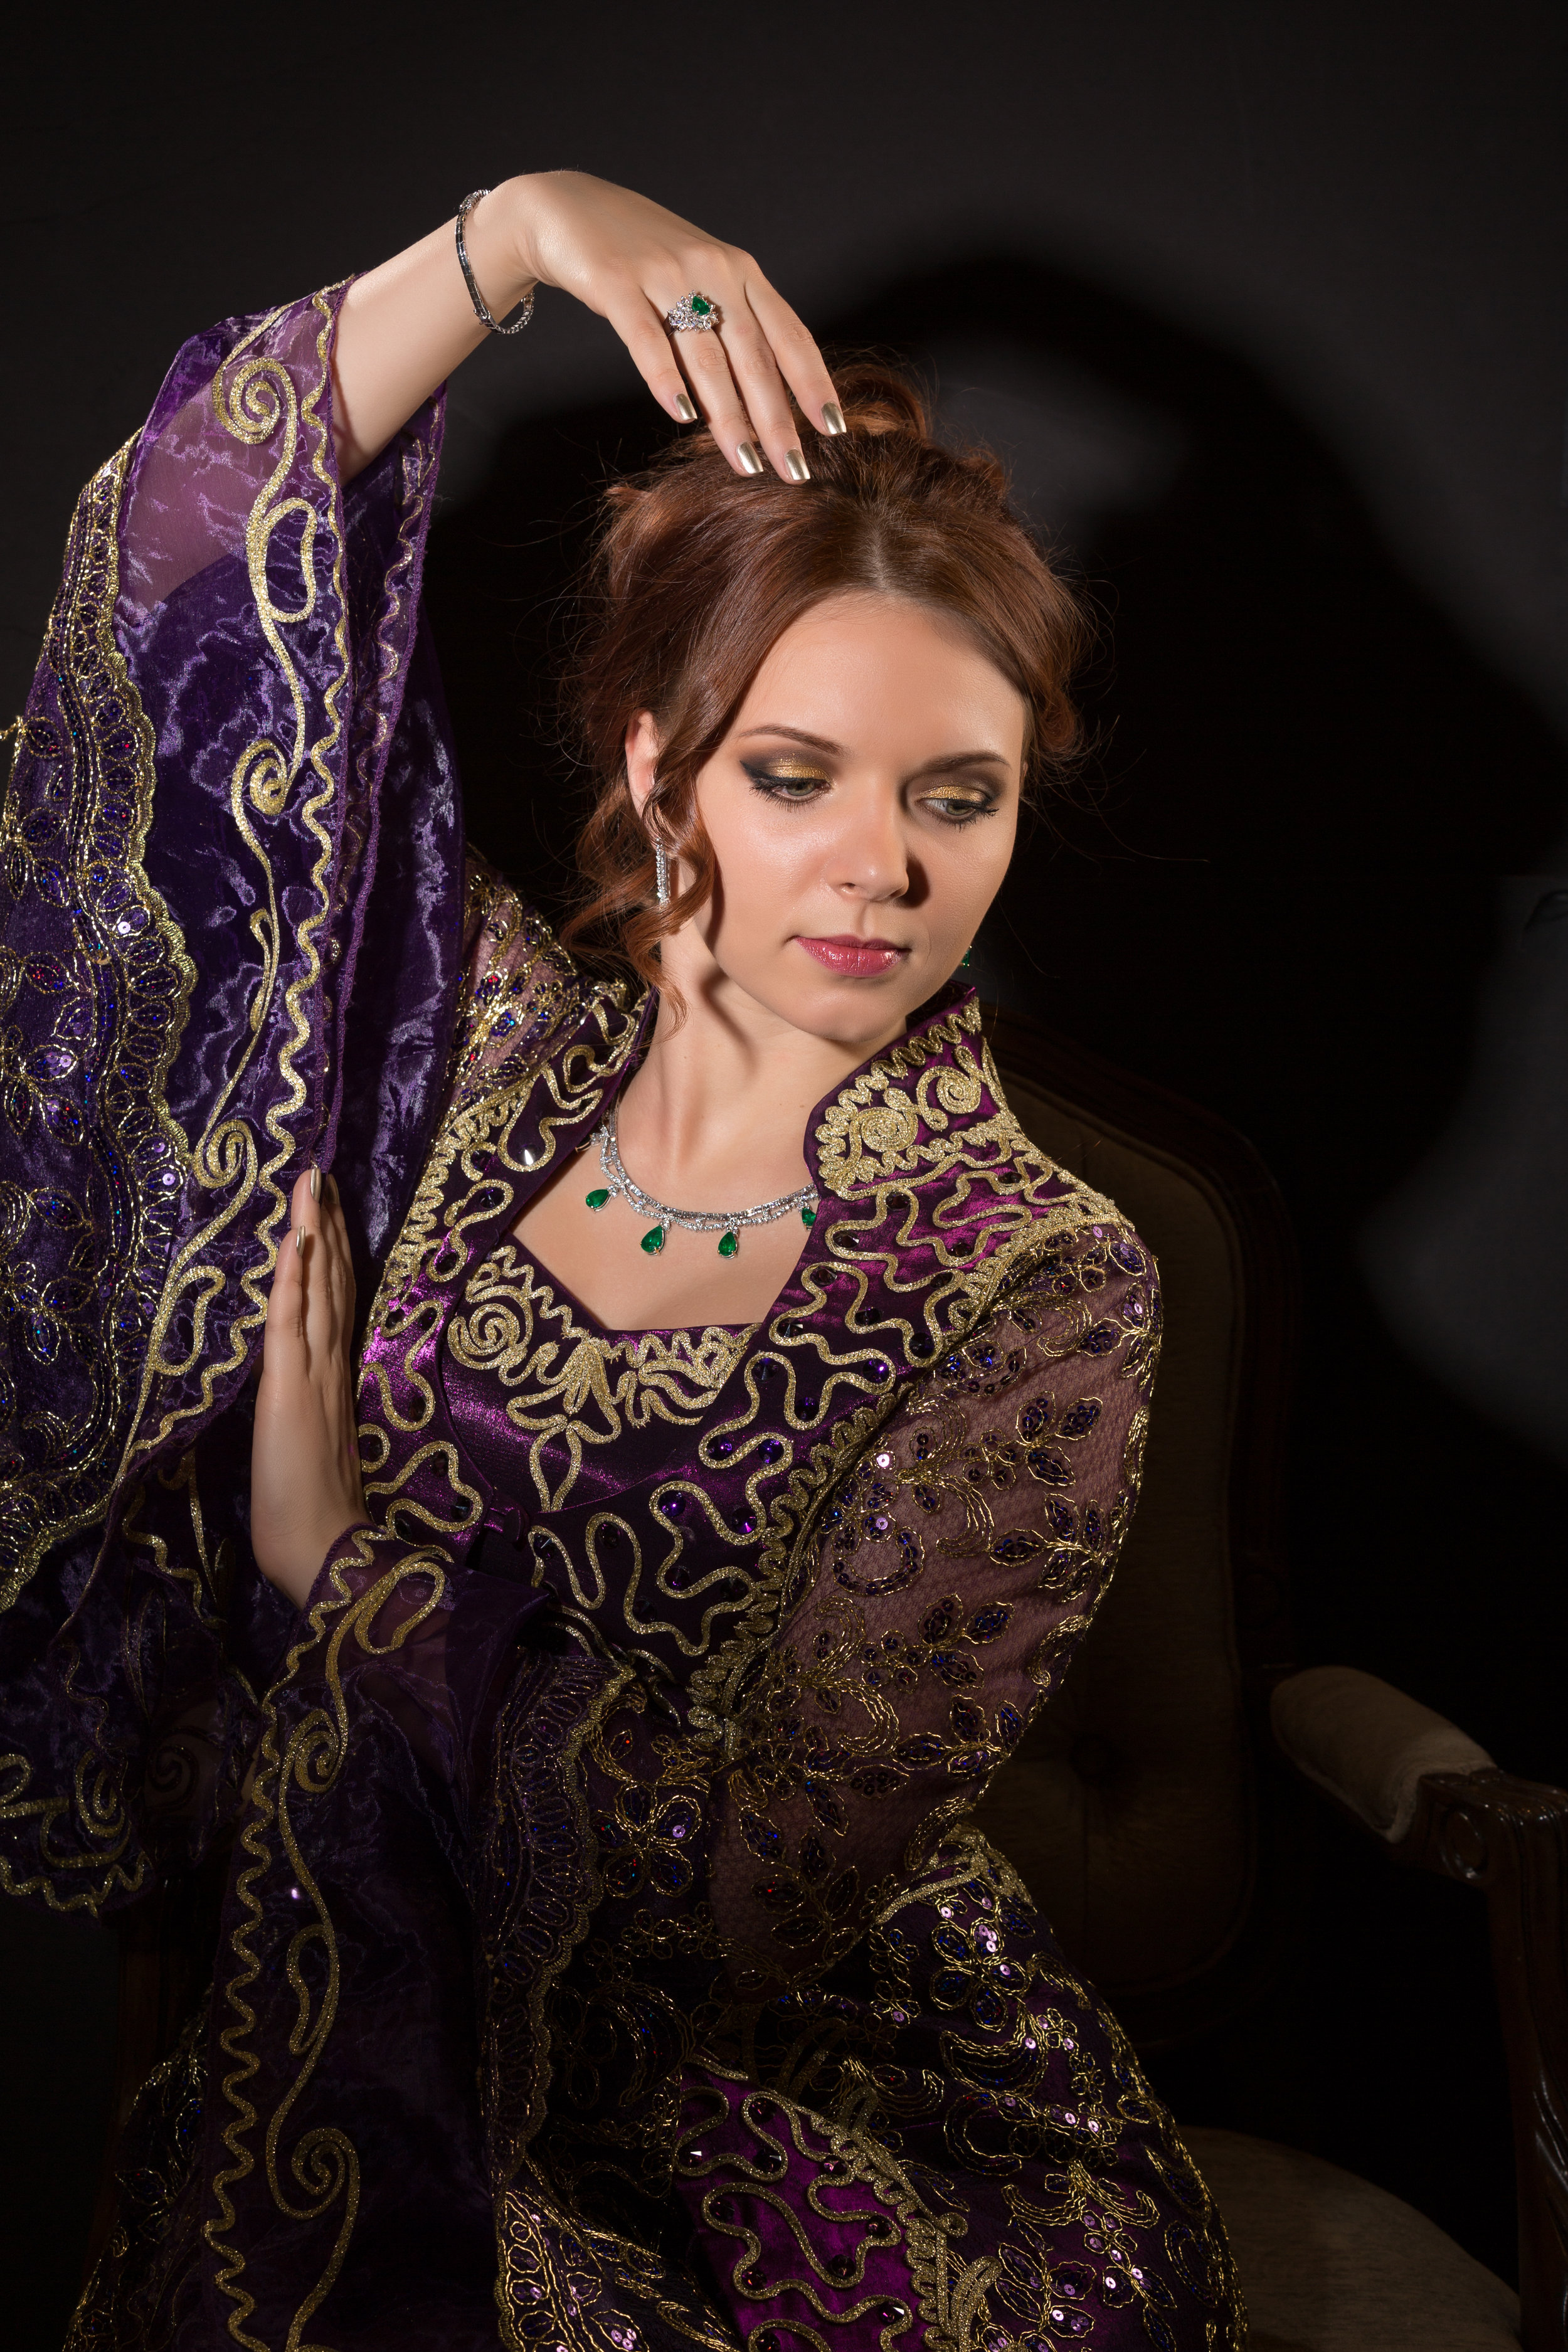 Photo by Pedro Bonatto-purple dress-2a.jpg